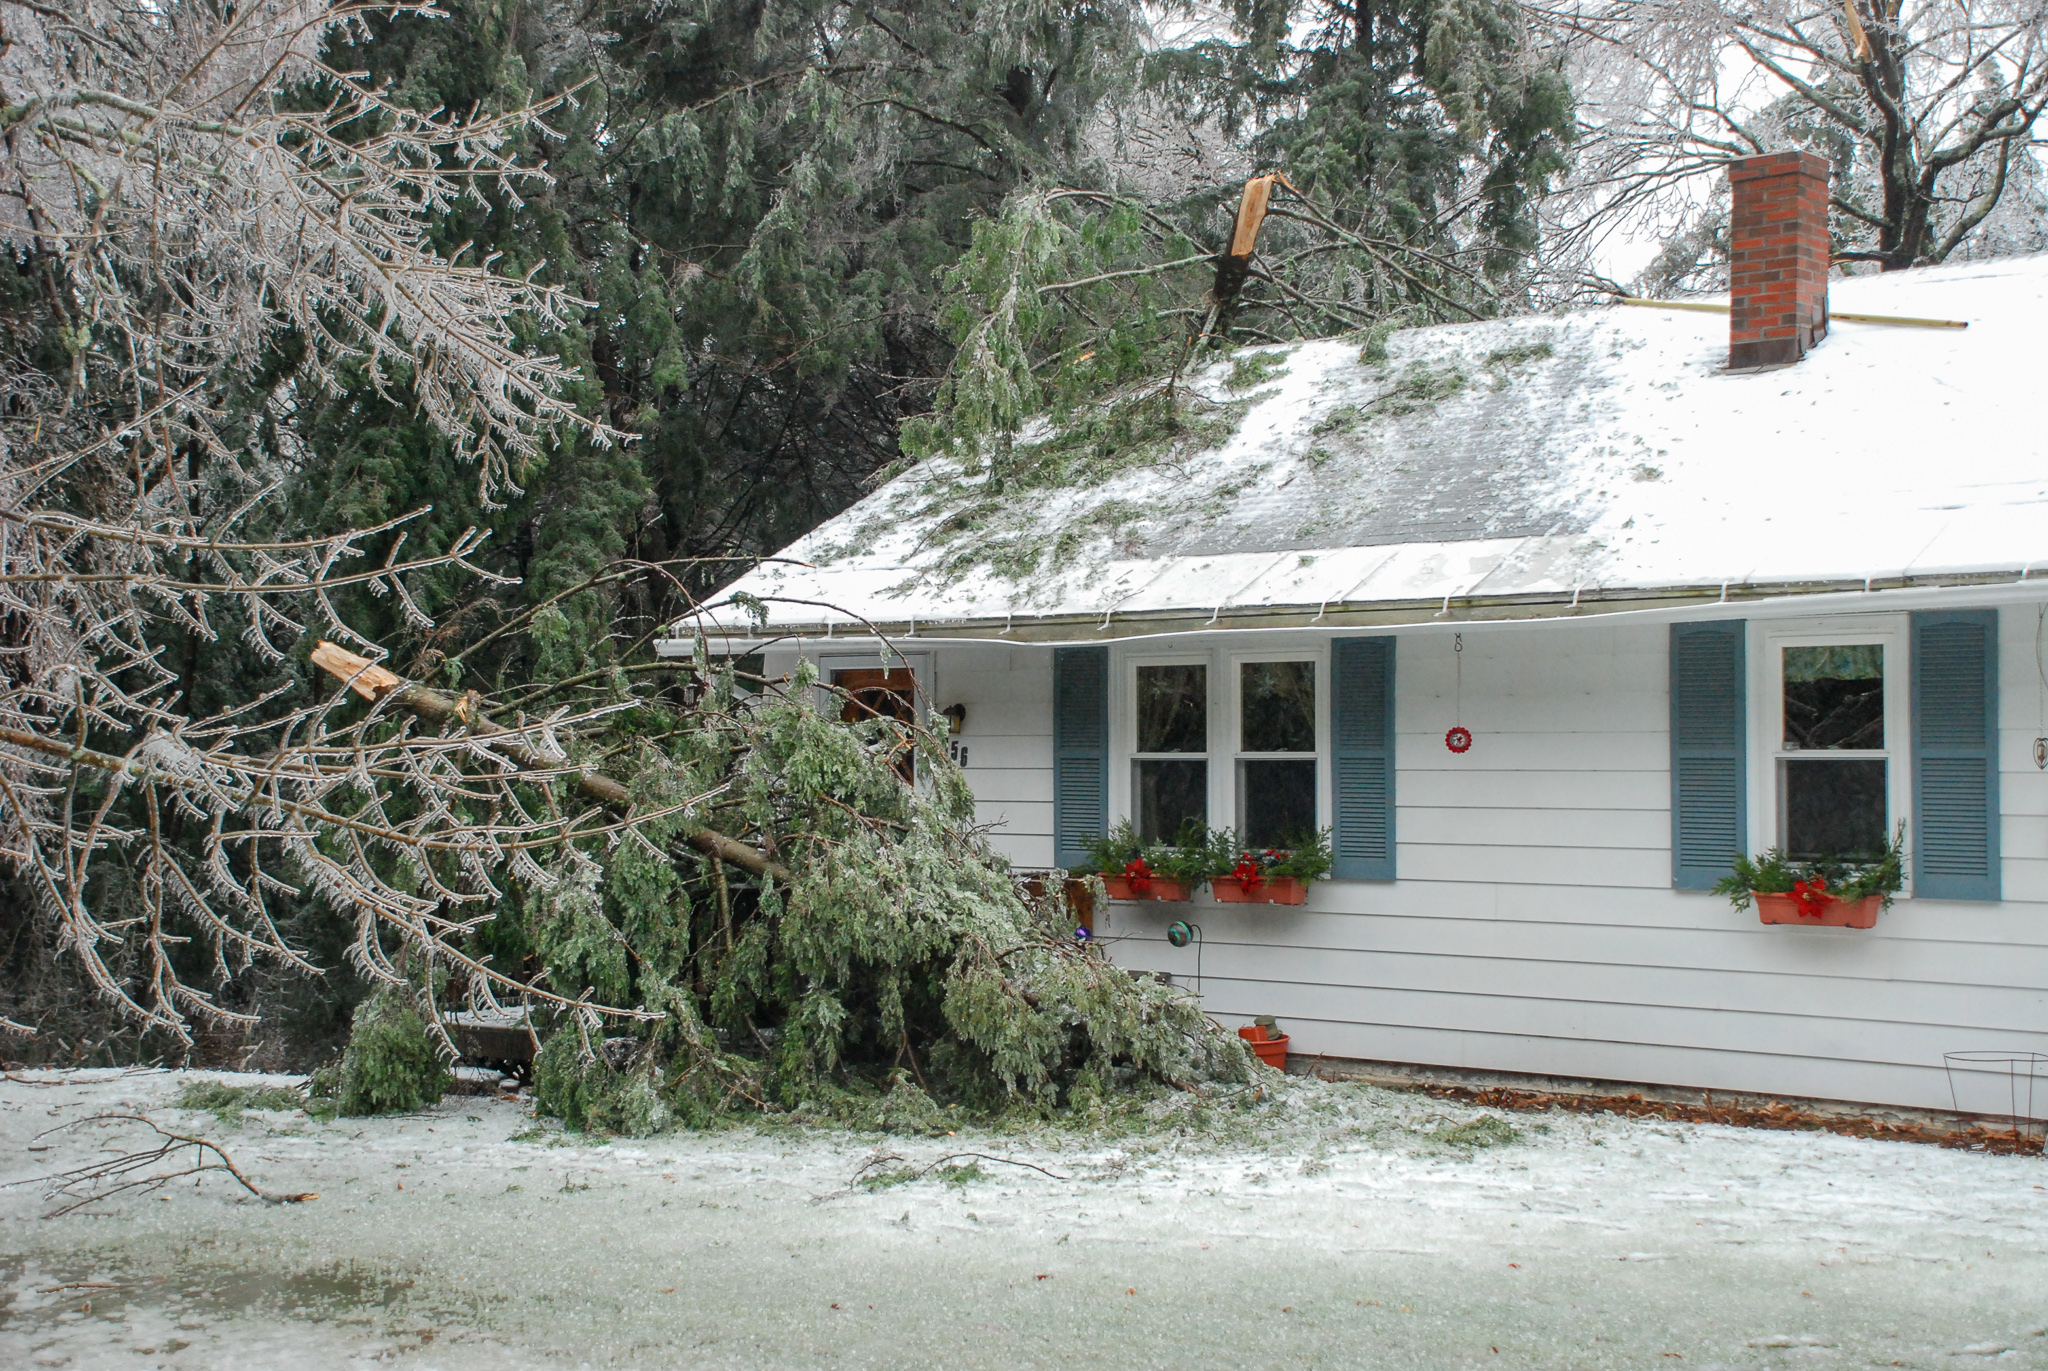 Ice storm damage (Dec. 13, 2008), Weather